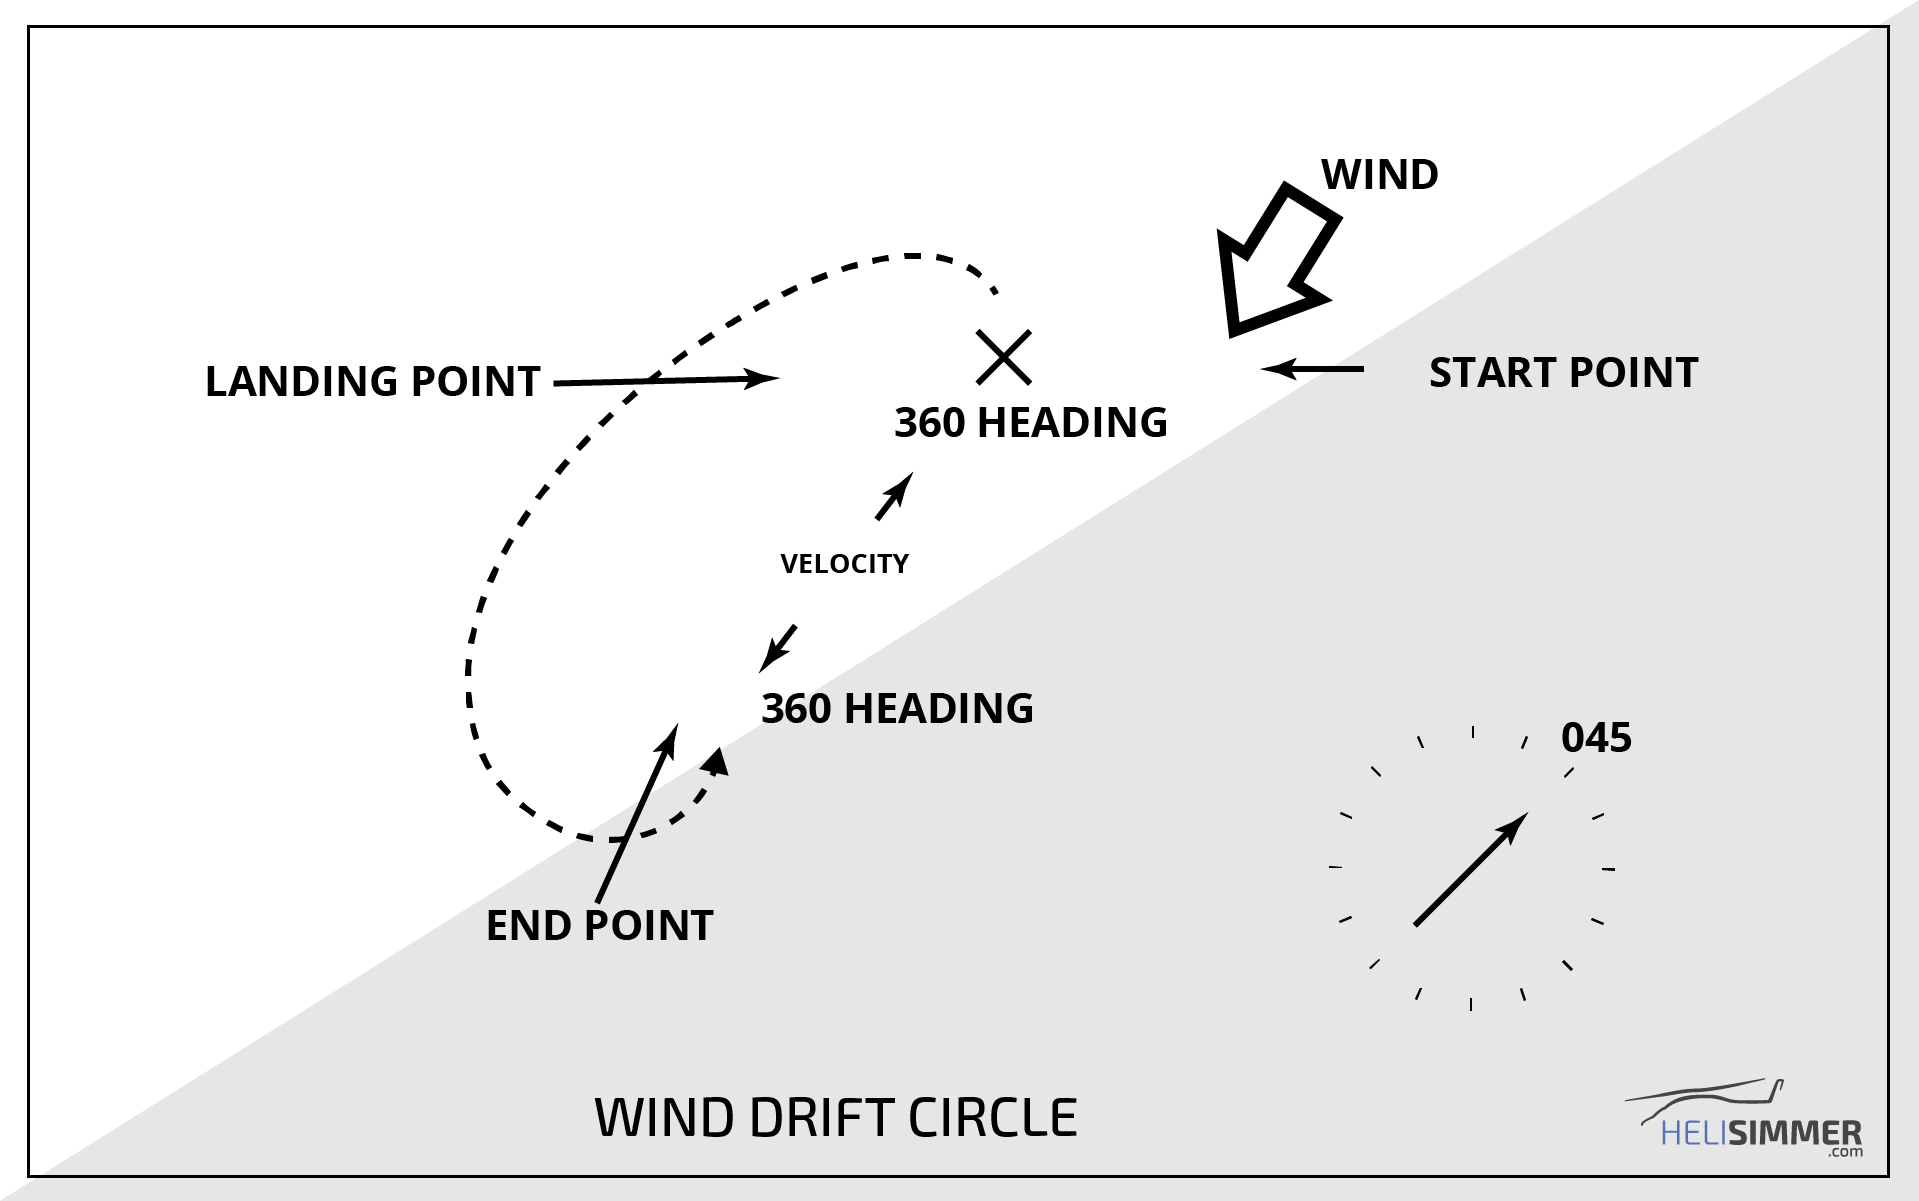 Wind drift circle